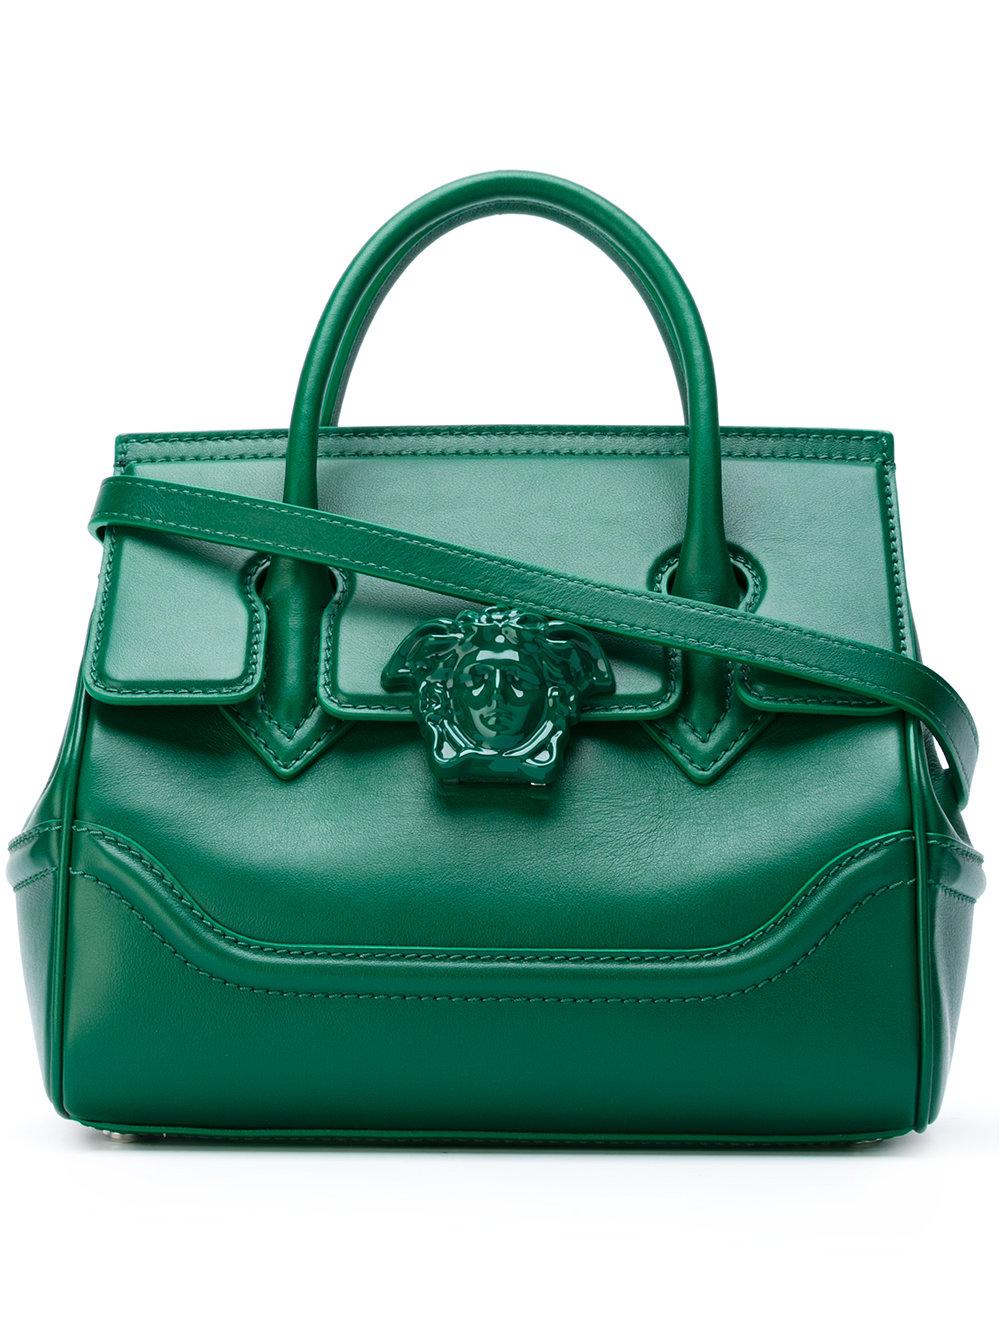 Lyst - Versace Palazzo Empire Shoulder Bag in Green